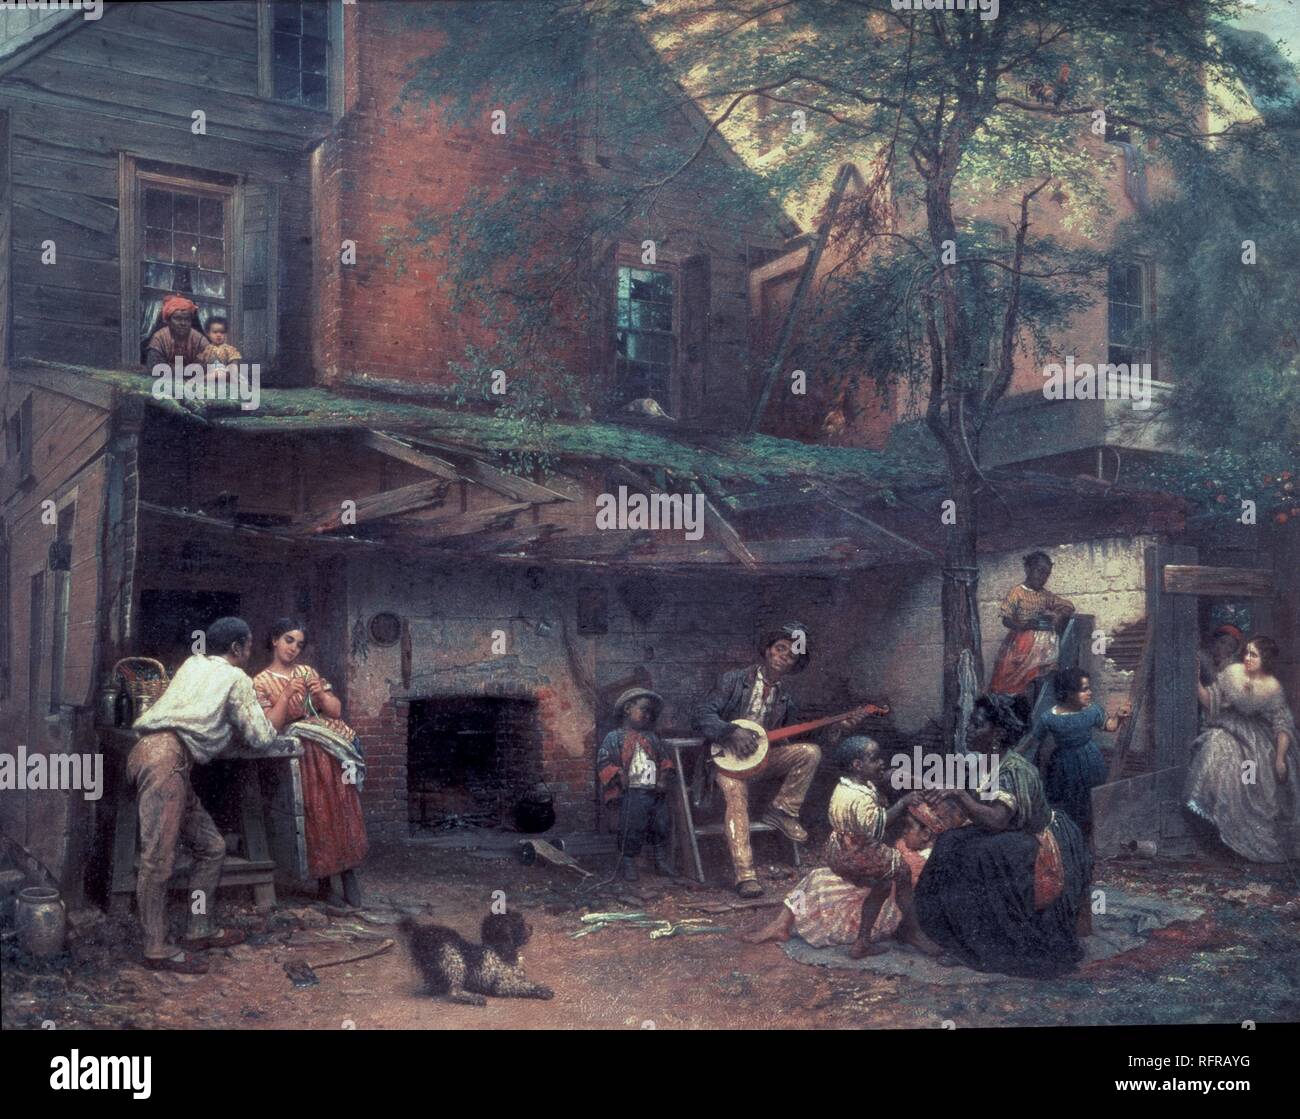 'Old Kentucky Home', 1859, Oil on canvas, 91 x 119 cm. Author: JOHNSON, EASTMAN. Location: SOCIEDAD HISTORICA. NEW YORK. Stock Photo